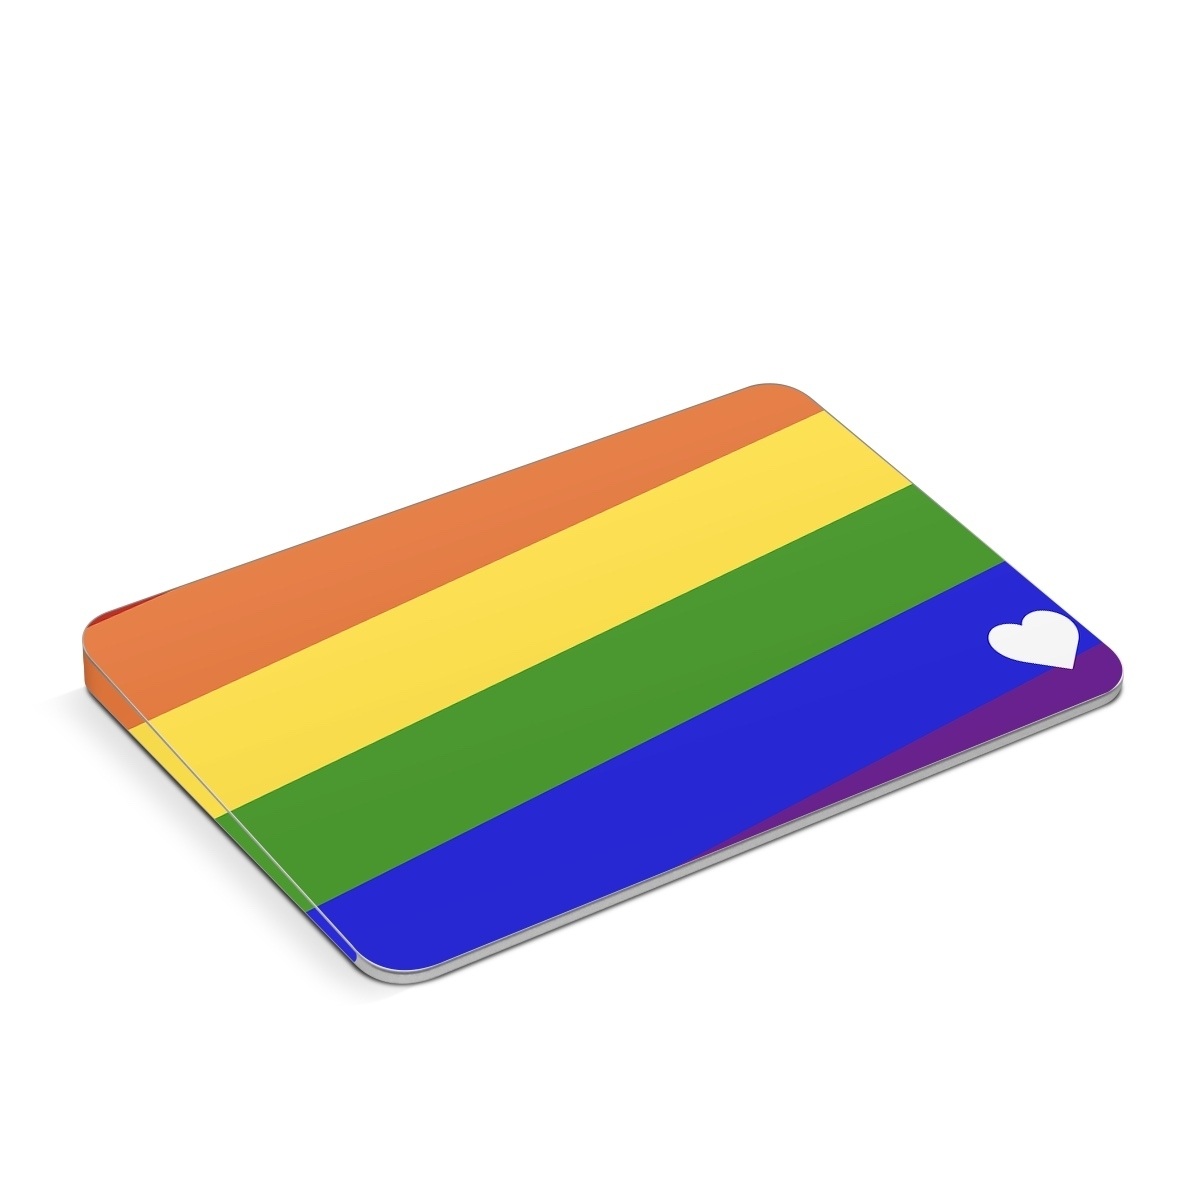 Rainbow - Apple Magic Trackpad 2 Skins, ट्रैकपैड - Sleeky